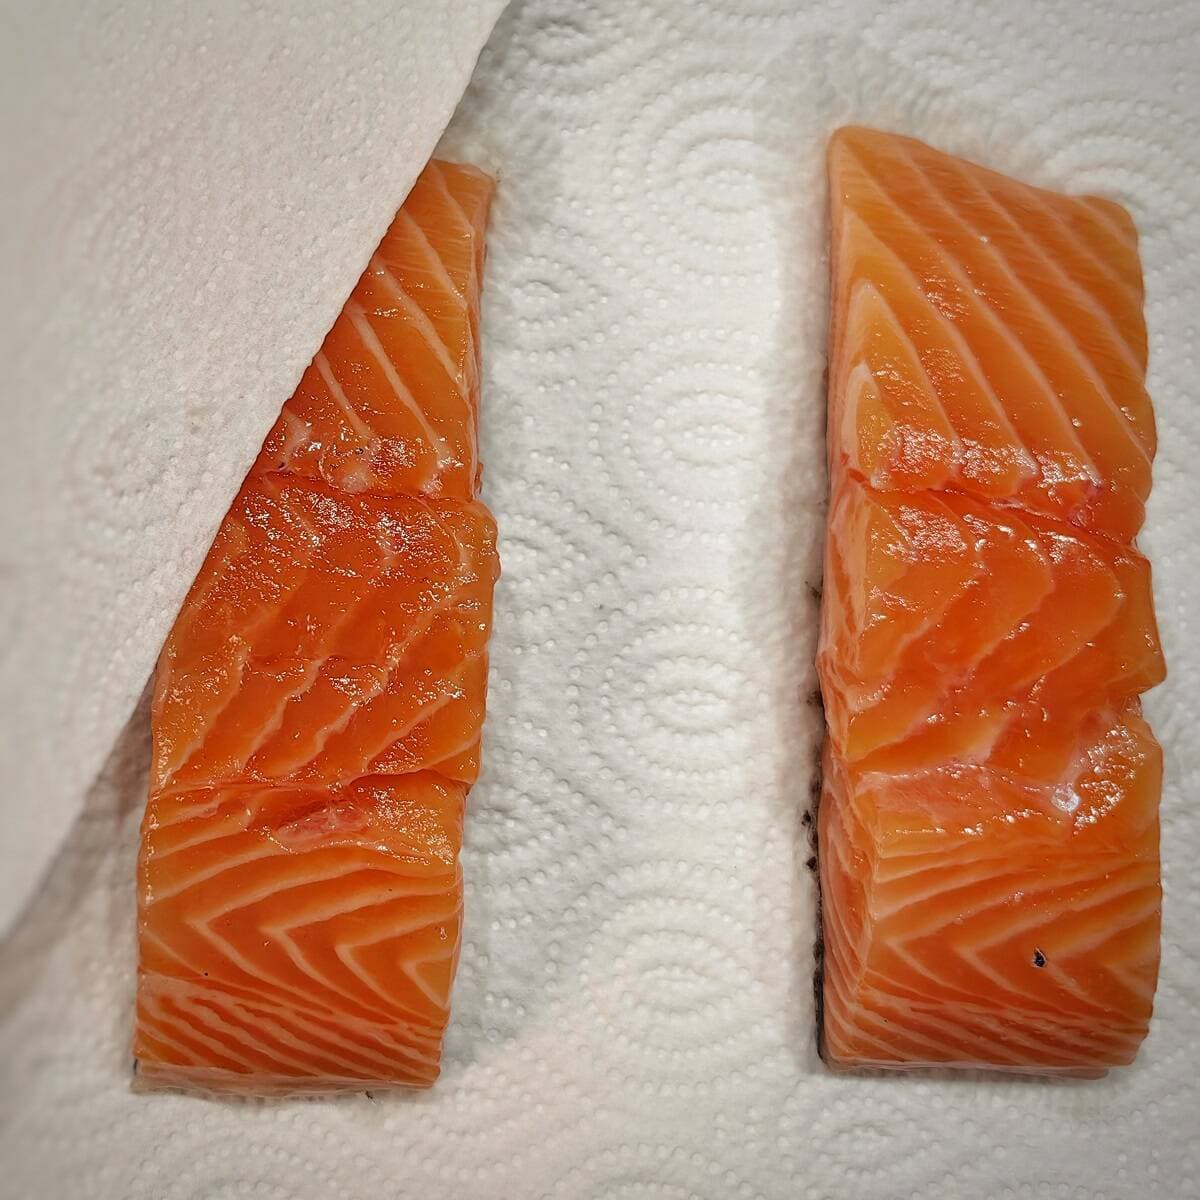 salmon fillets on paper towel